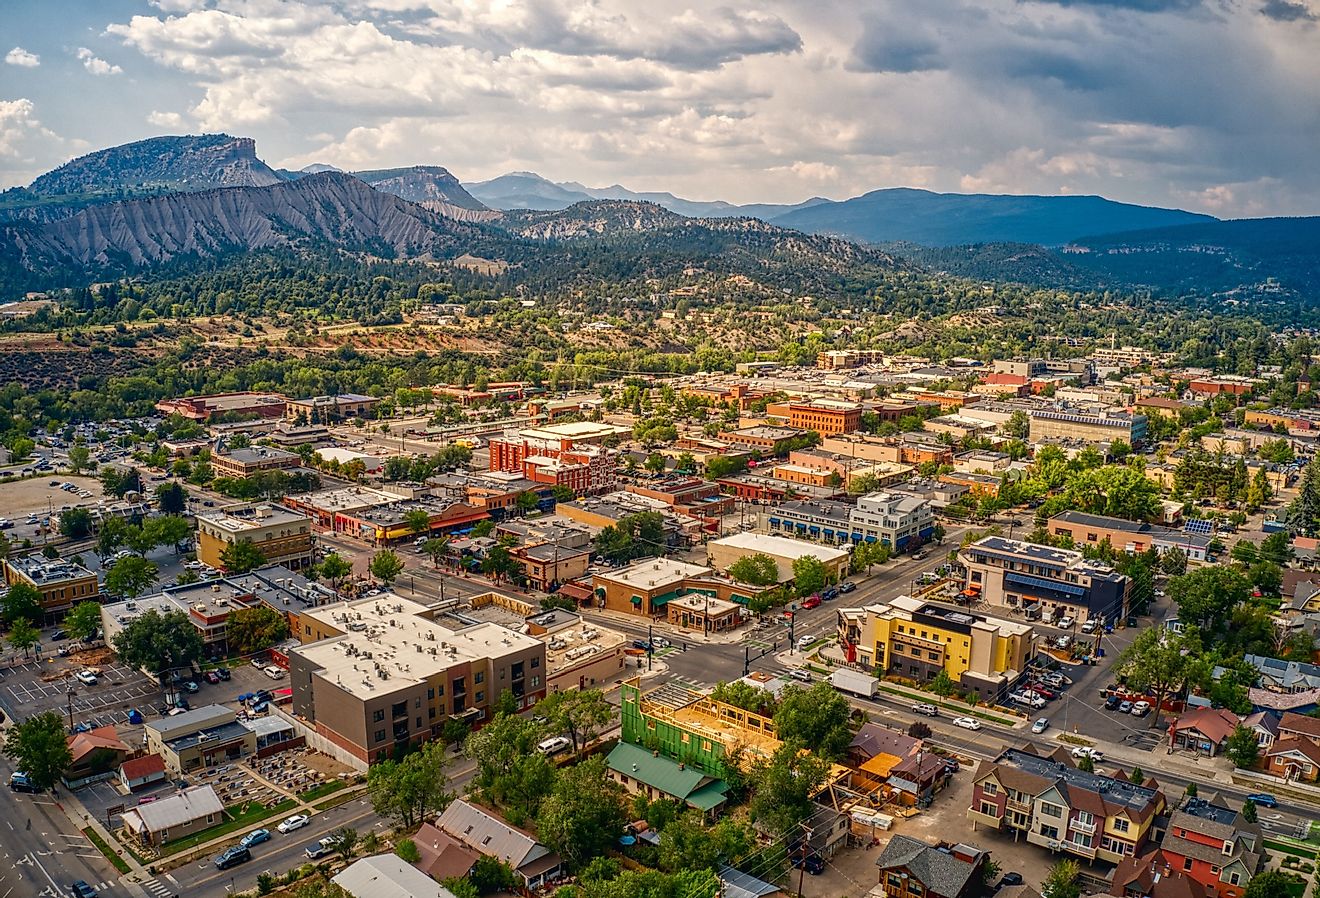 Aerial View of Durango, Colorado in summer. Image credit Jacob Boomsma via Shutterstock